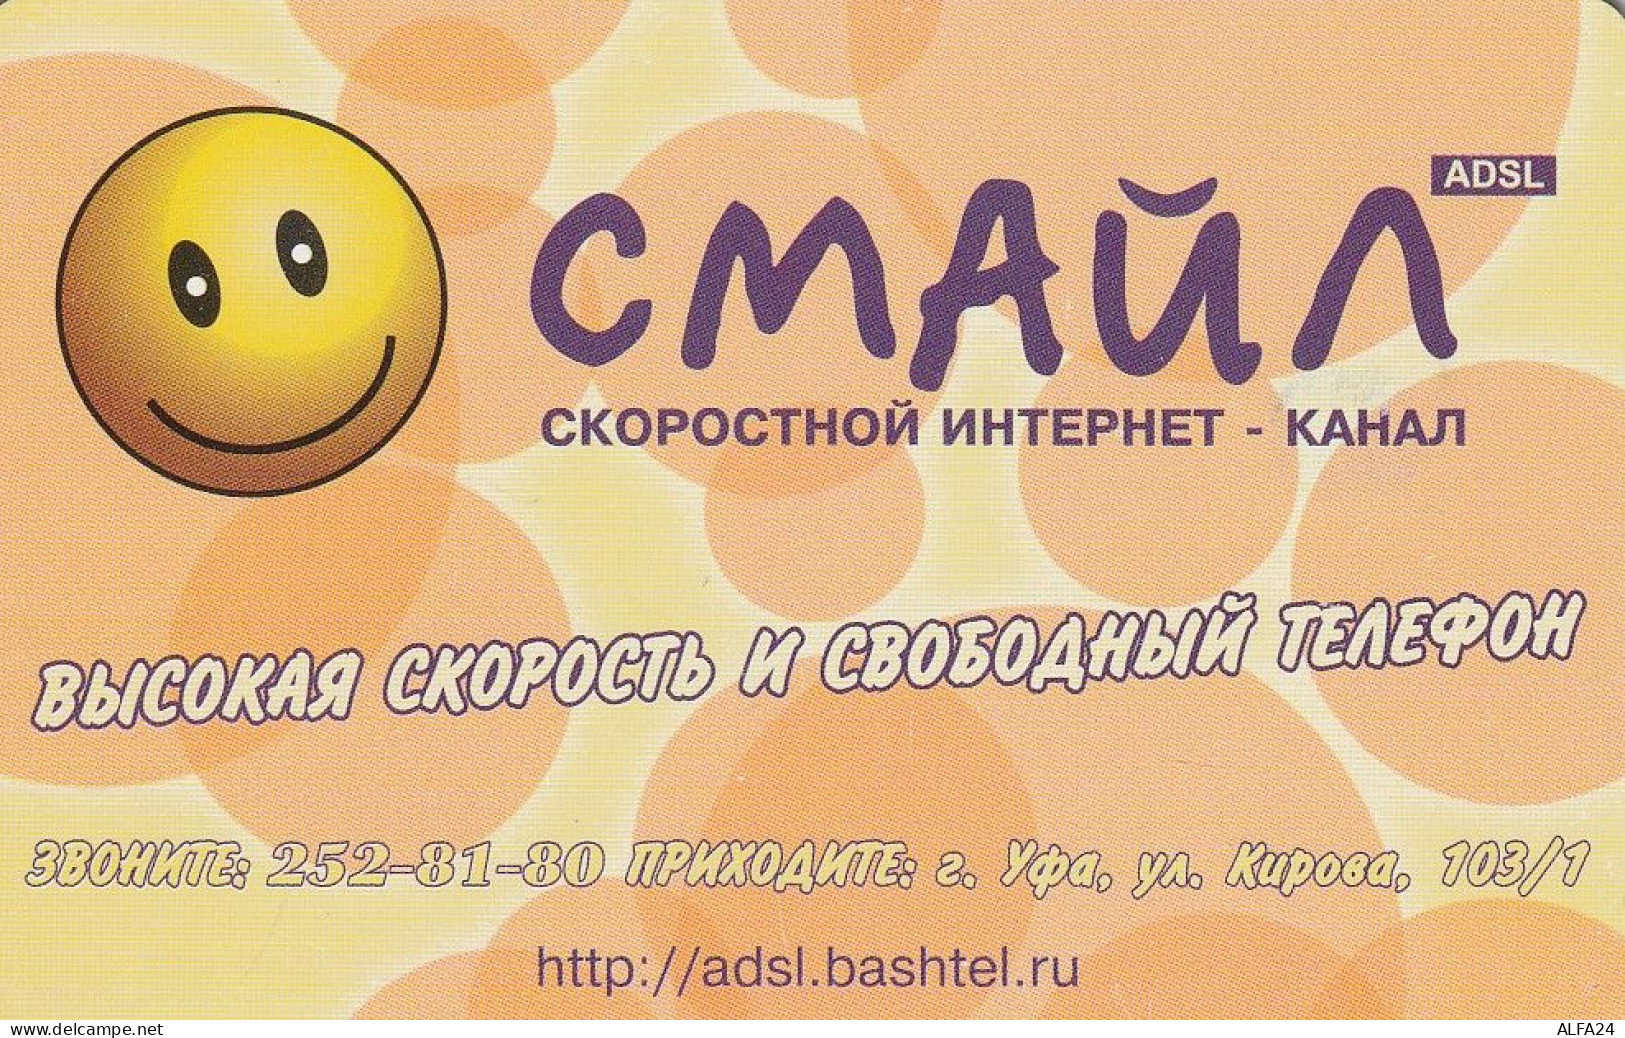 PHONE CARD RUSSIA Bashinformsvyaz - Ufa (E9.25.5 - Rusia